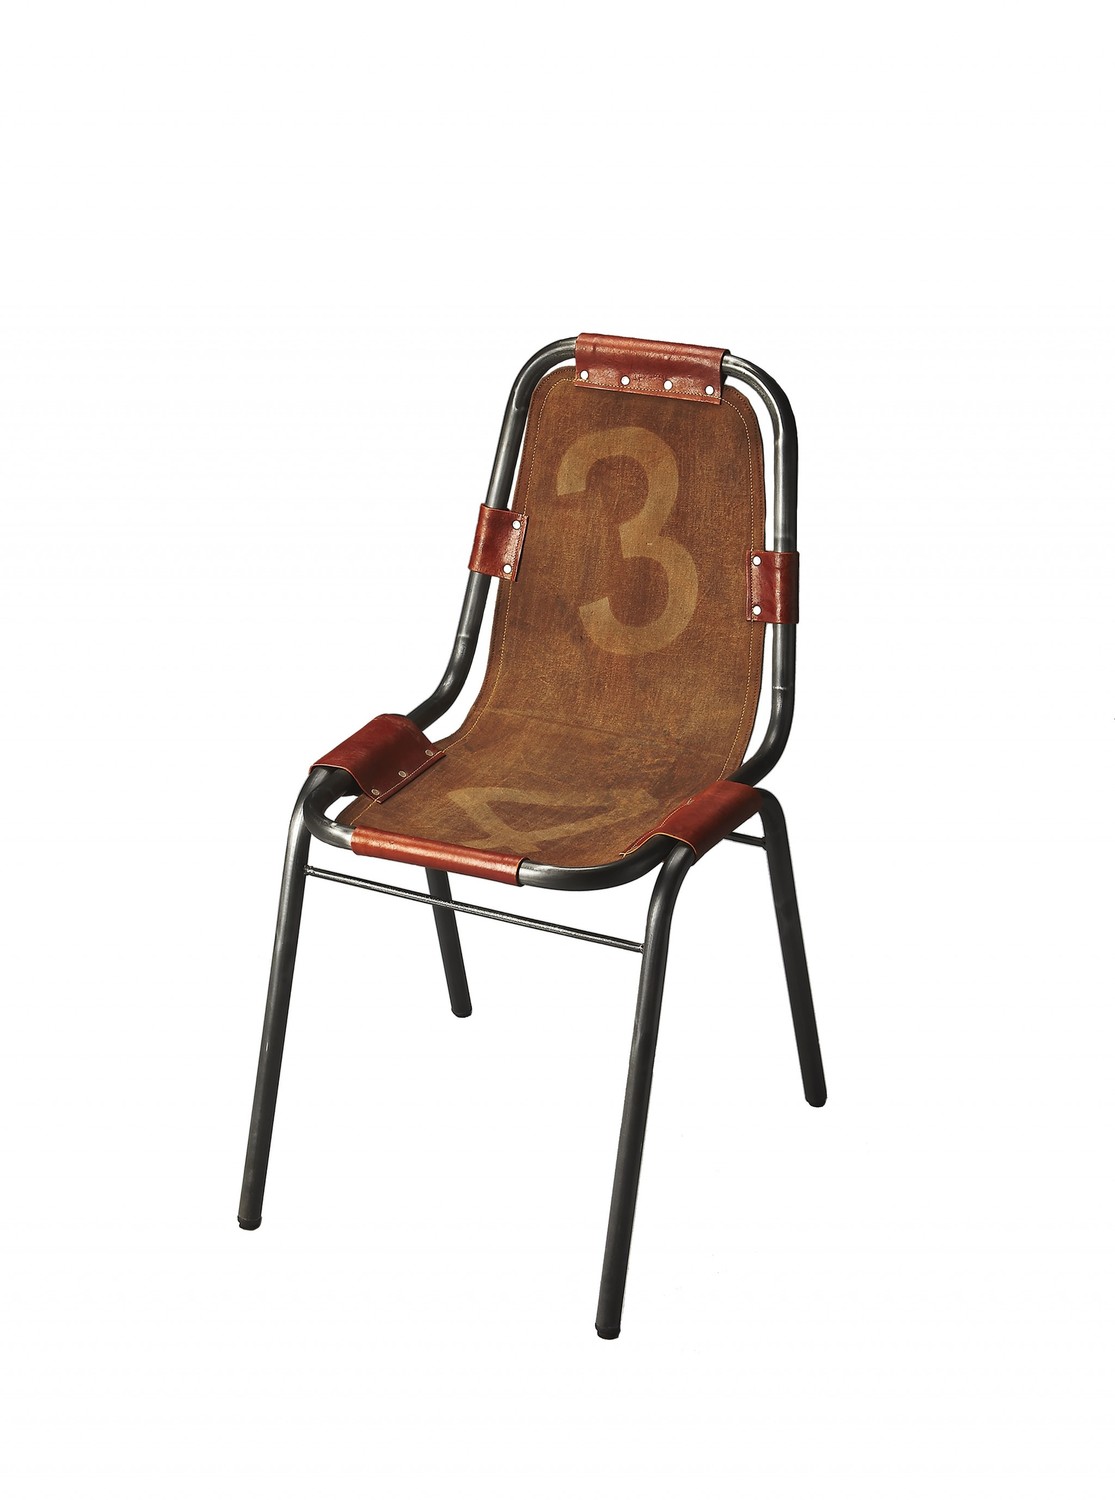 Industrial Vintage Dining Chair